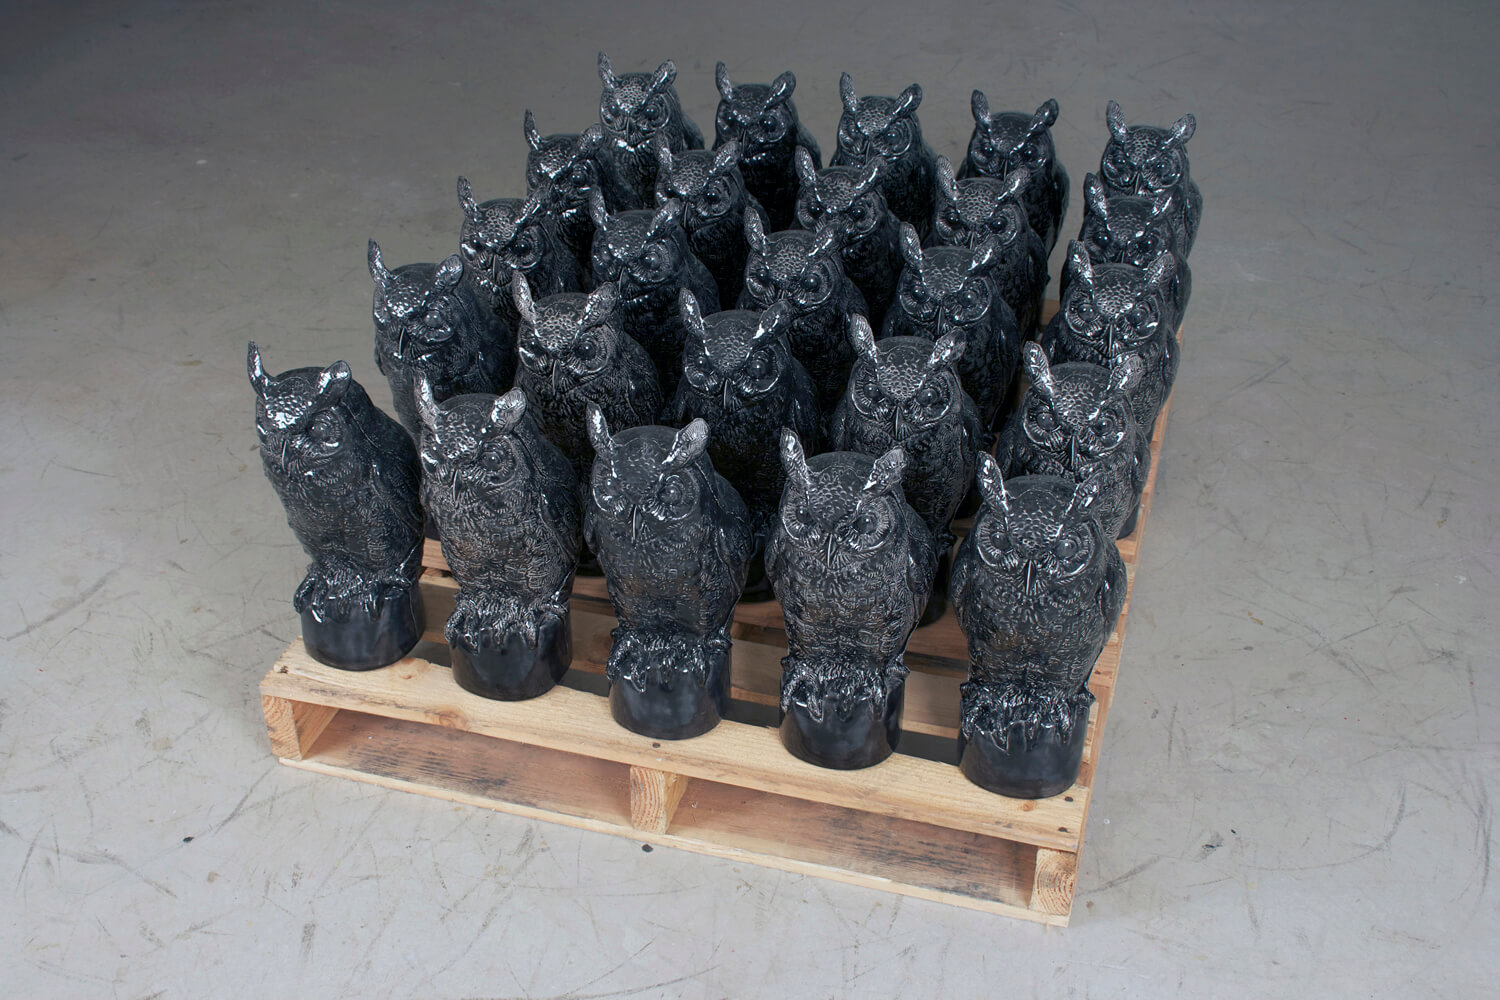 David Packer, "Short Circuit", cast and glazed ceramic, 2011